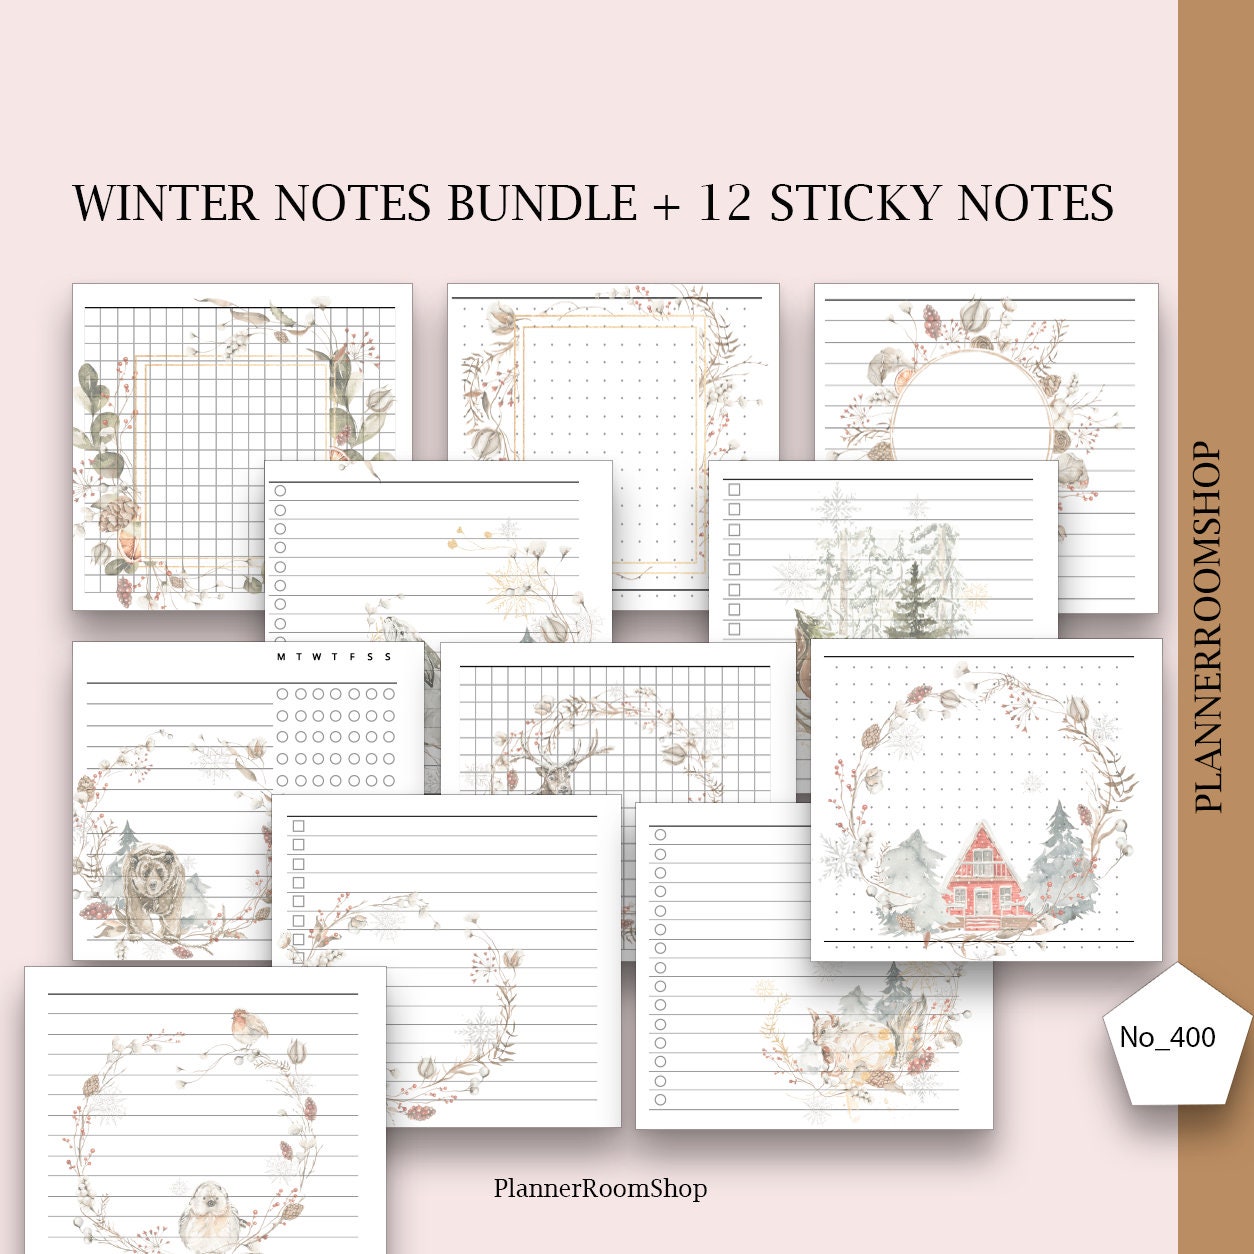 Printable Winter Notes, 12 Sticky Notes Bundle, Standard TN, Grid Paper,  Printable Task List, Watercolour Paper, Winter Landscape, Printable 